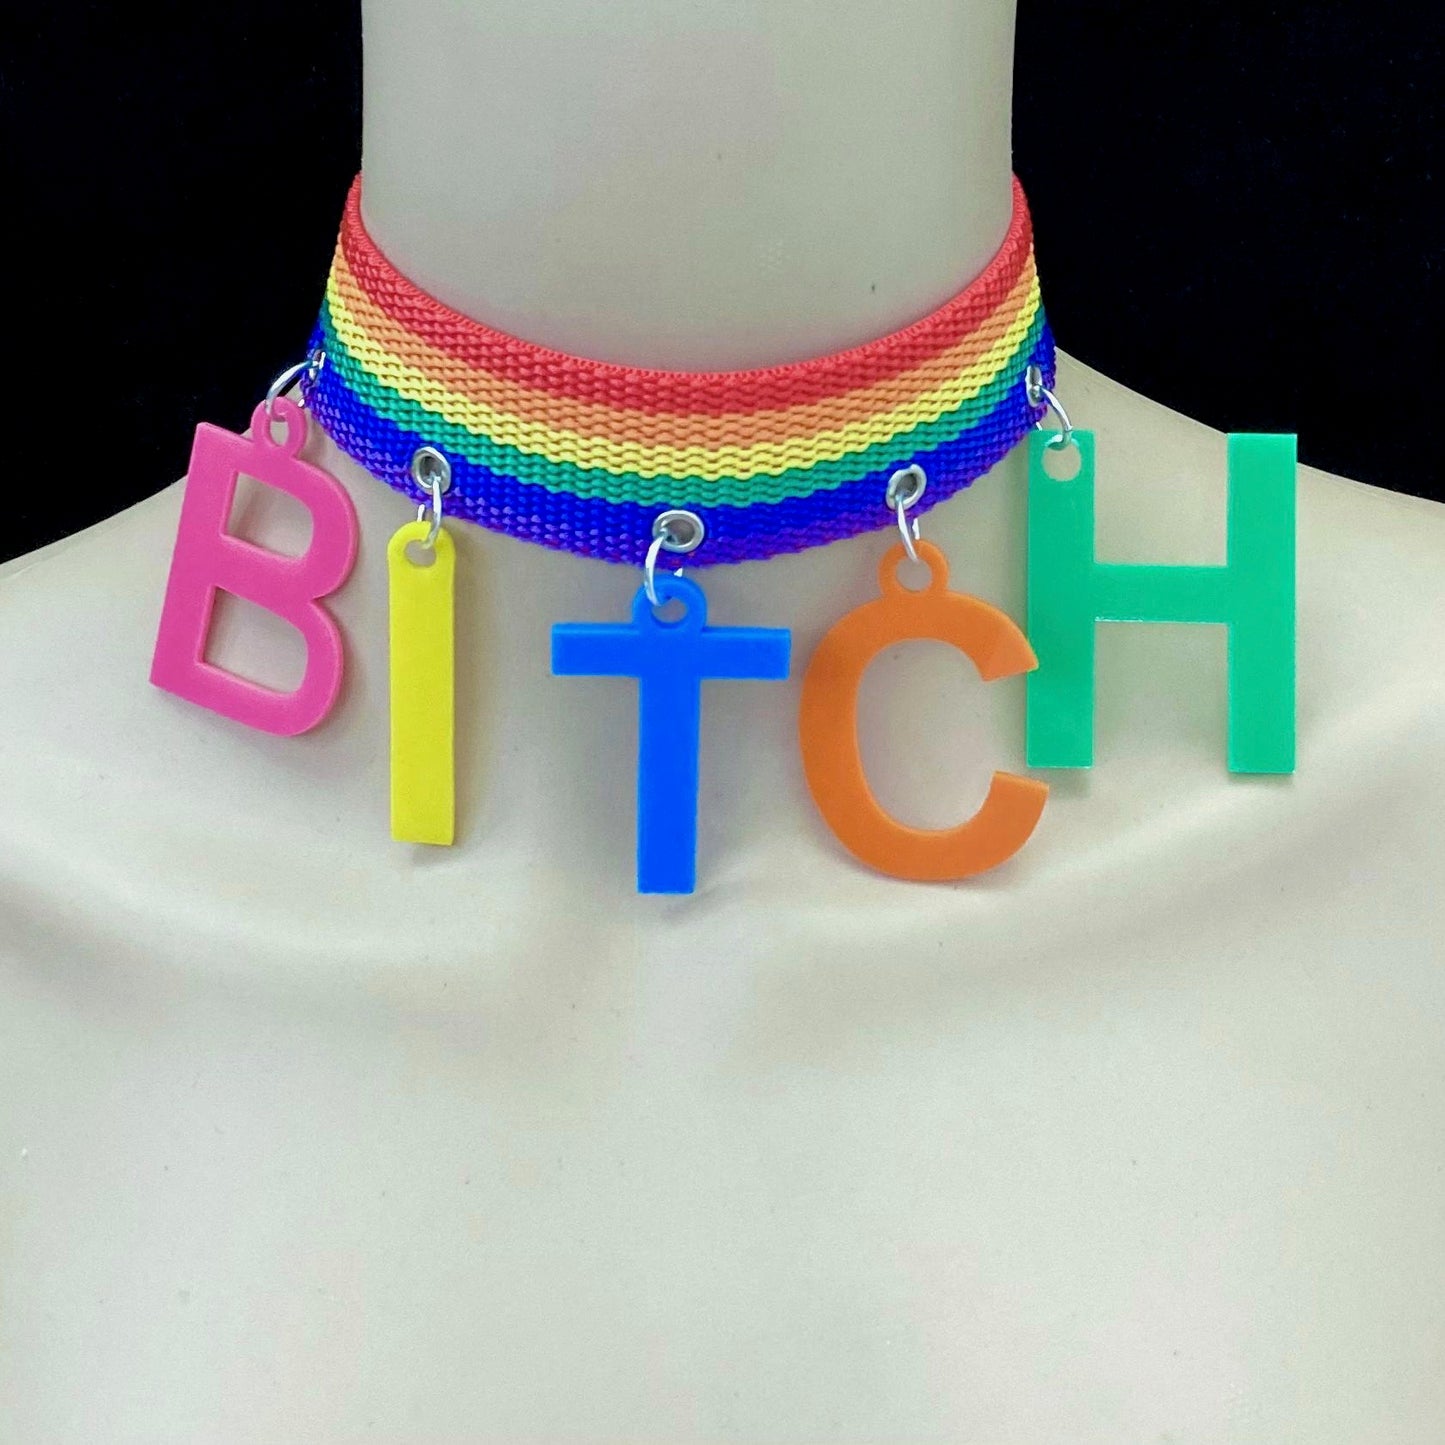 Bitch Rainbow Choker